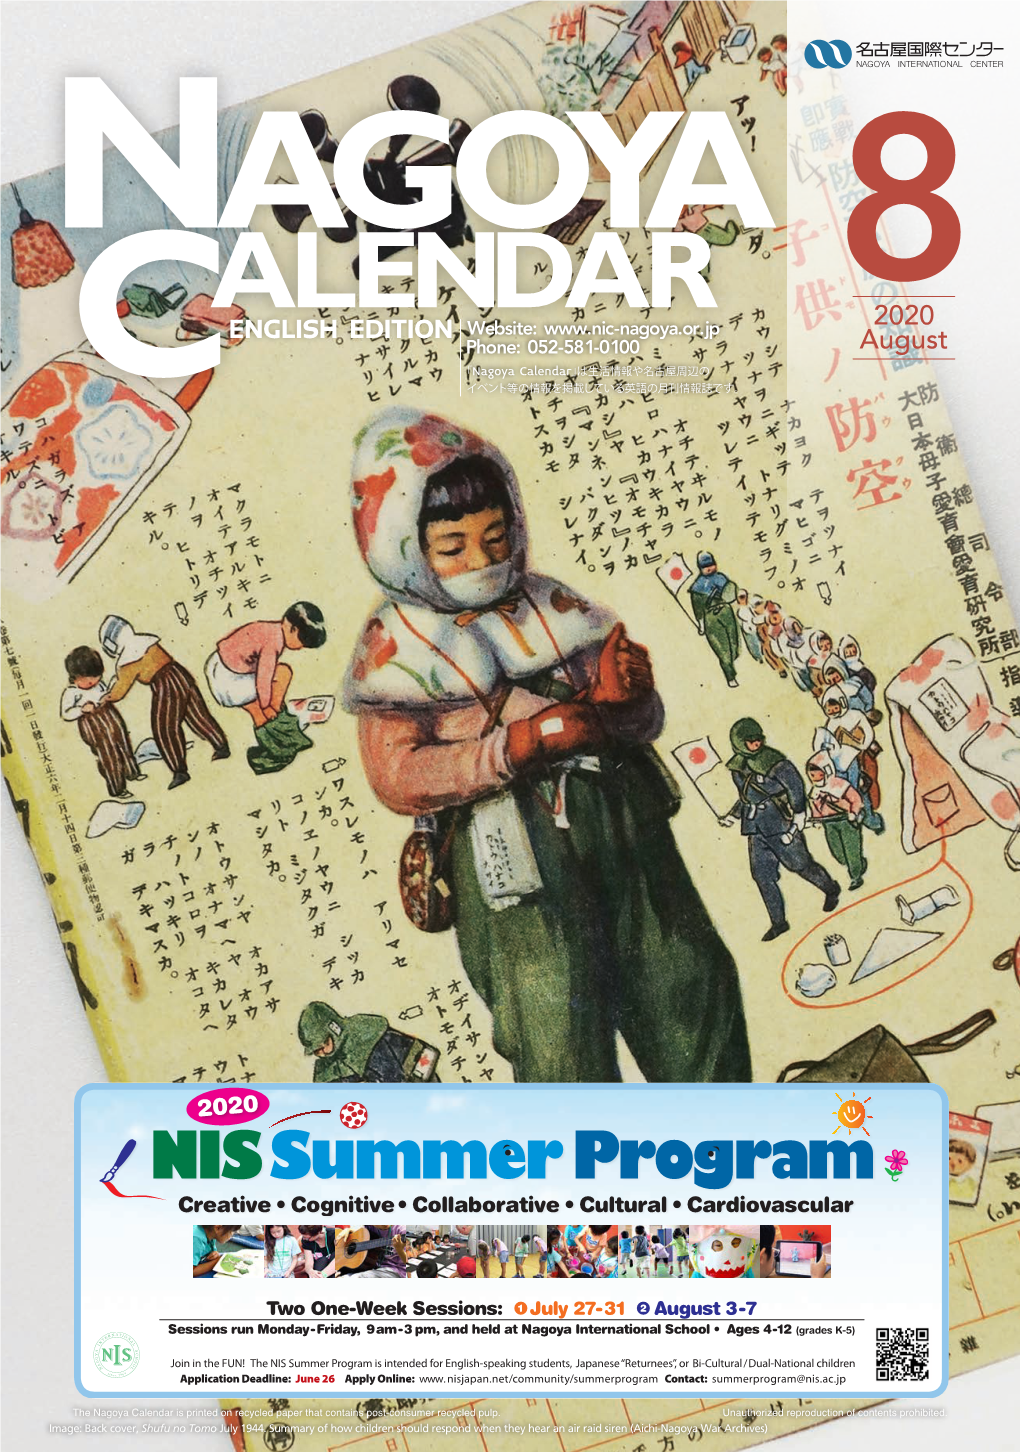 NAGOYA 8 AENGLISHL Editionenwebsite:D 2020 Phone: 052-581-0100 August 「Nagoya Calendar」は生活情報や名古屋周辺の C イベント等の情報を掲載している英語の月刊情報誌です。